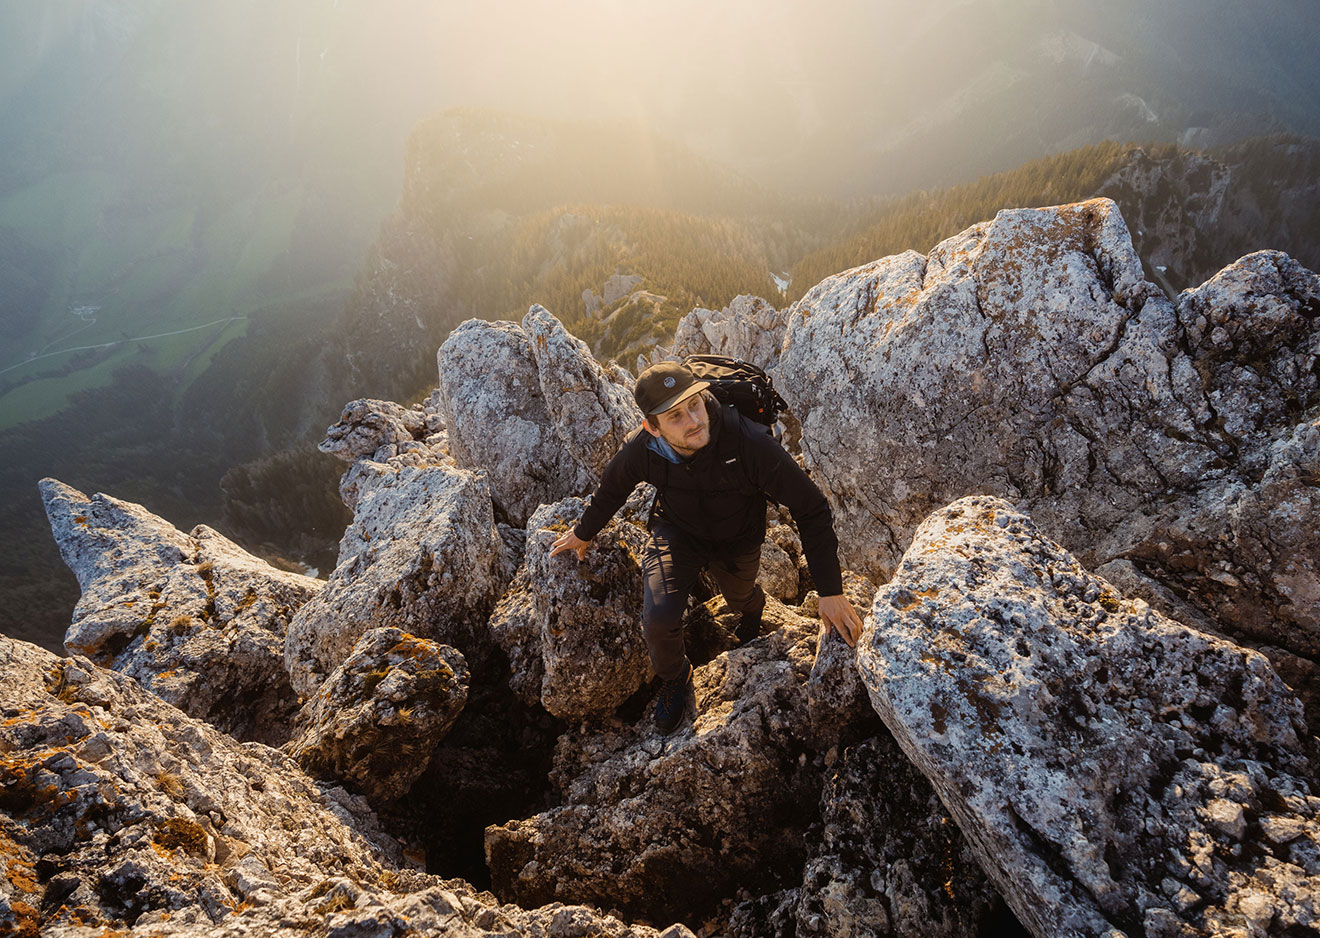 A close-up of a mountaineer climbing up a rocky ridge